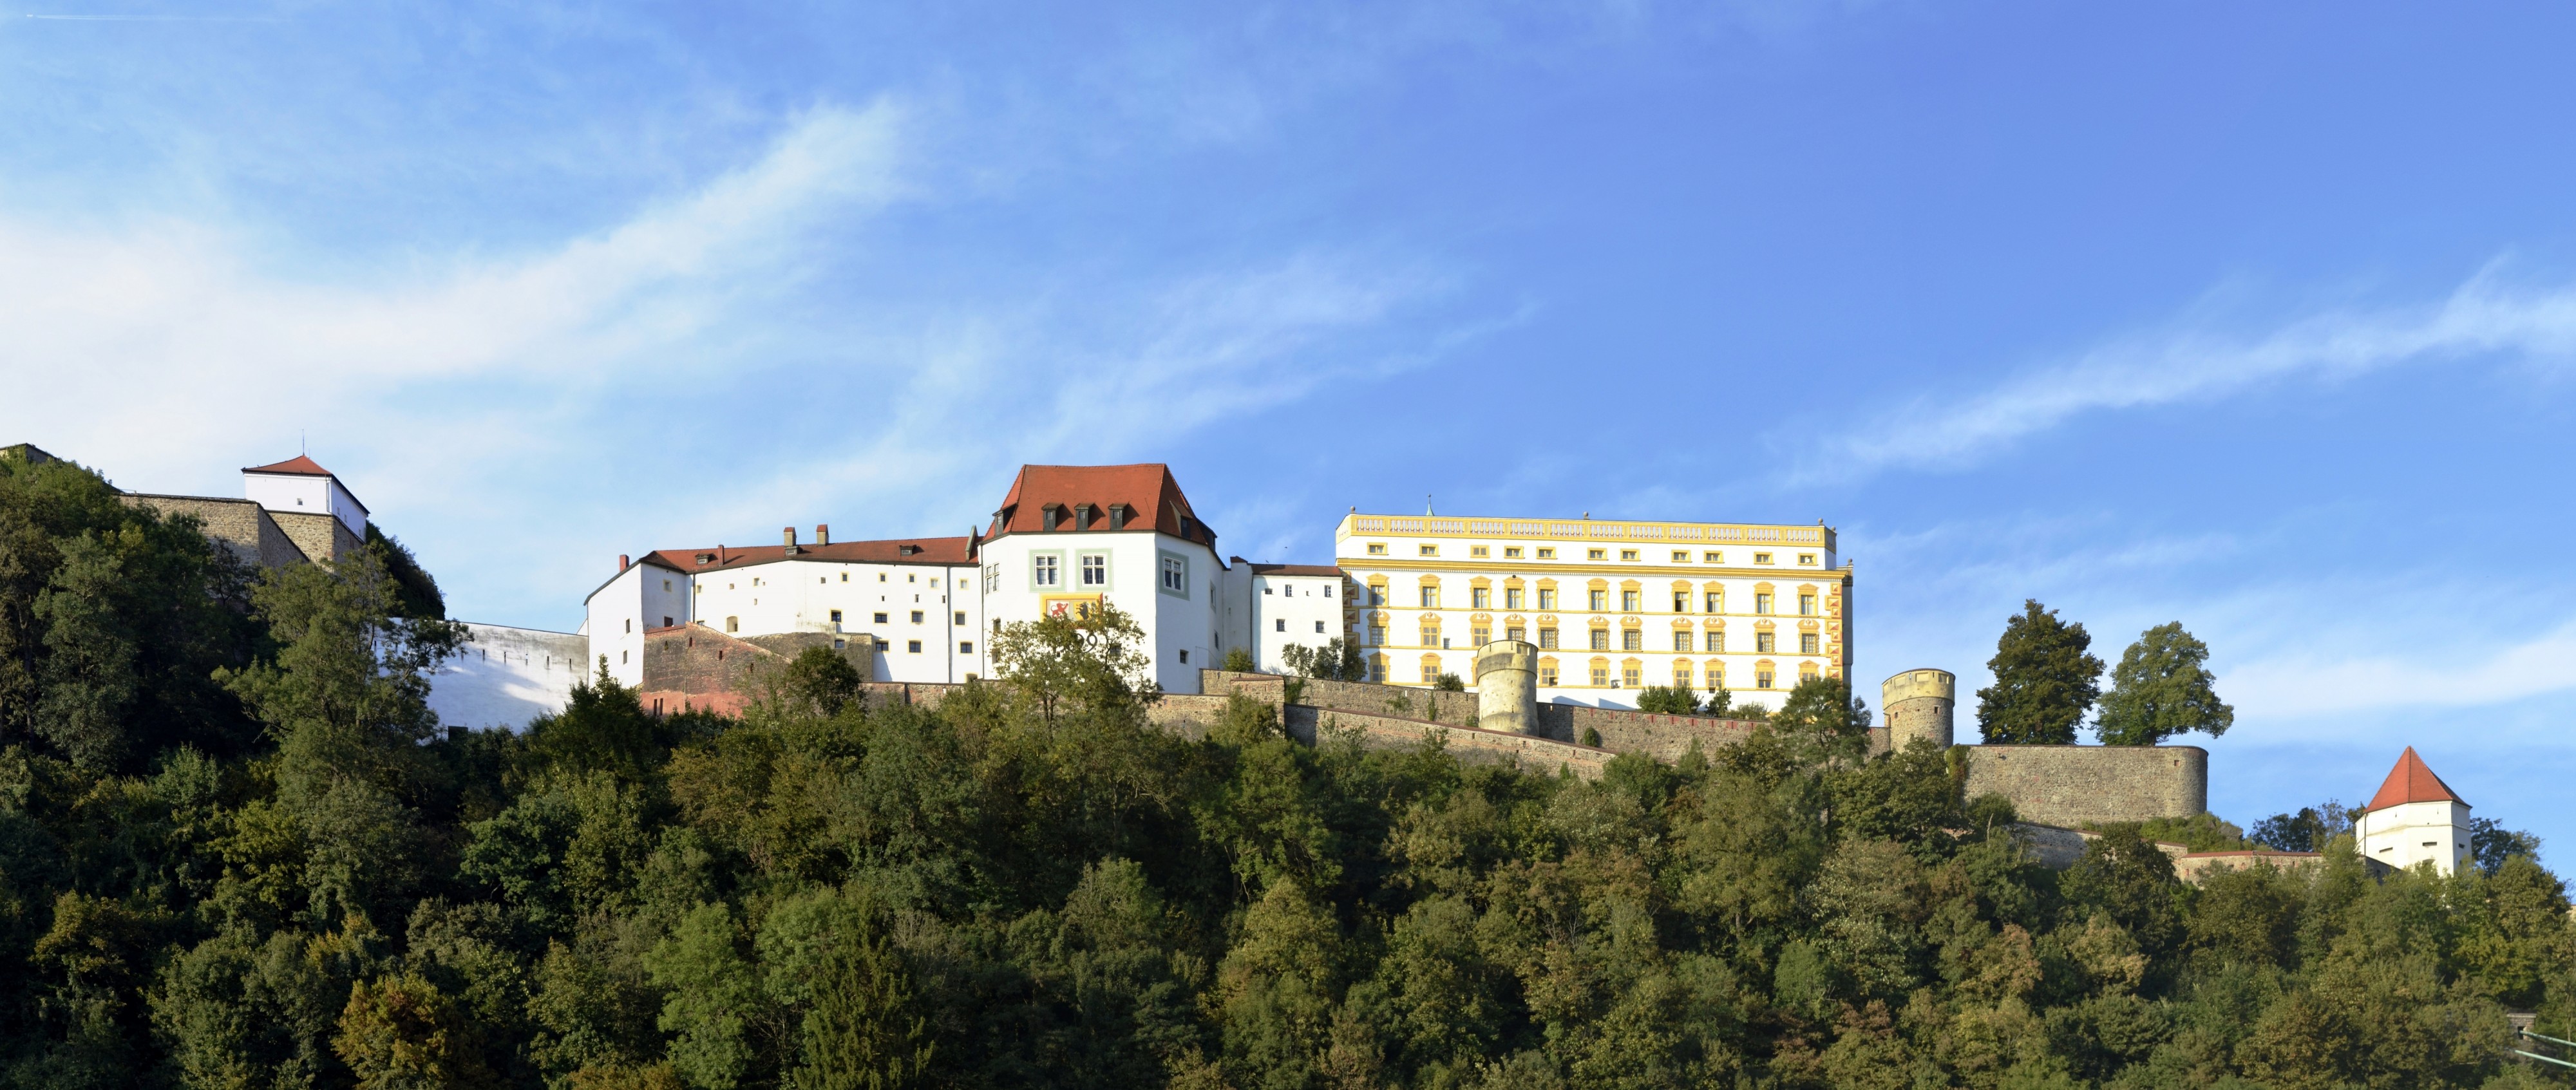 2011 - Veste Oberhaus in Passau